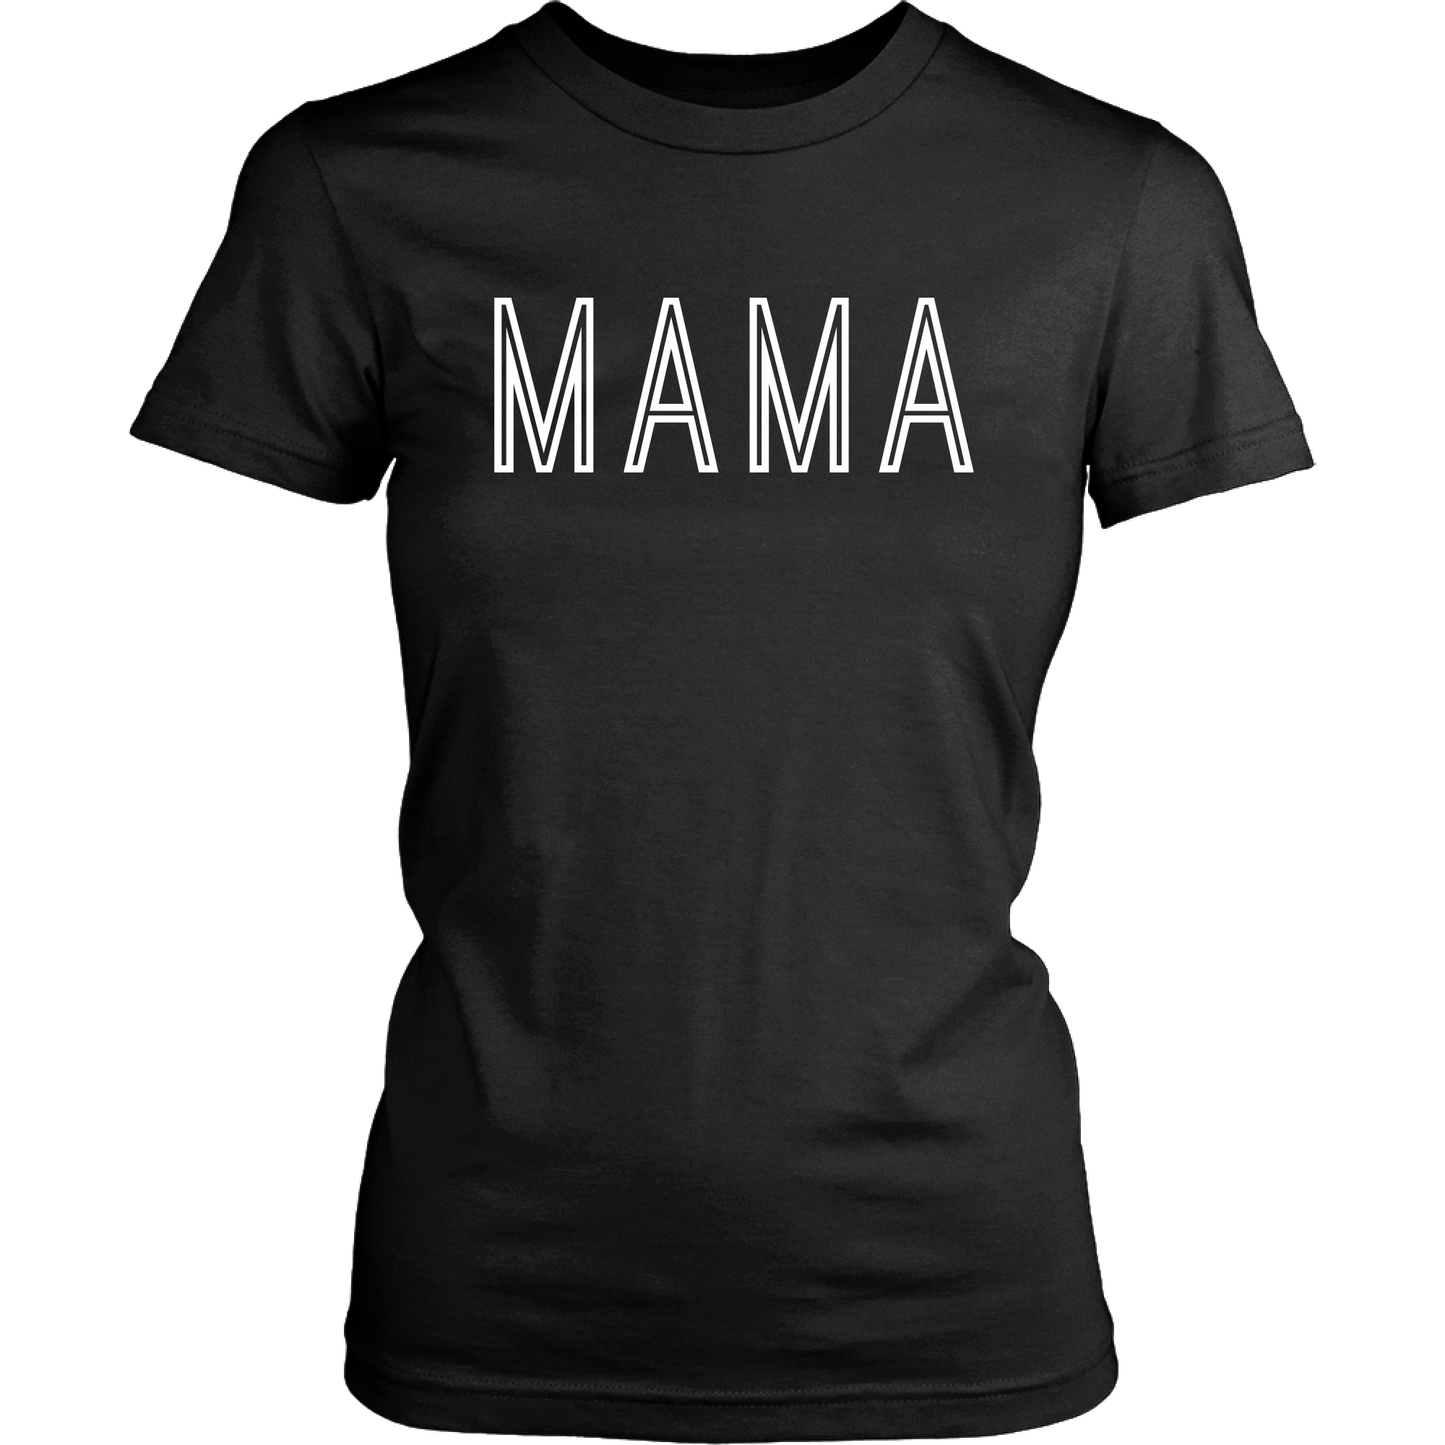 Mama & Litte Man - Couple Shirt